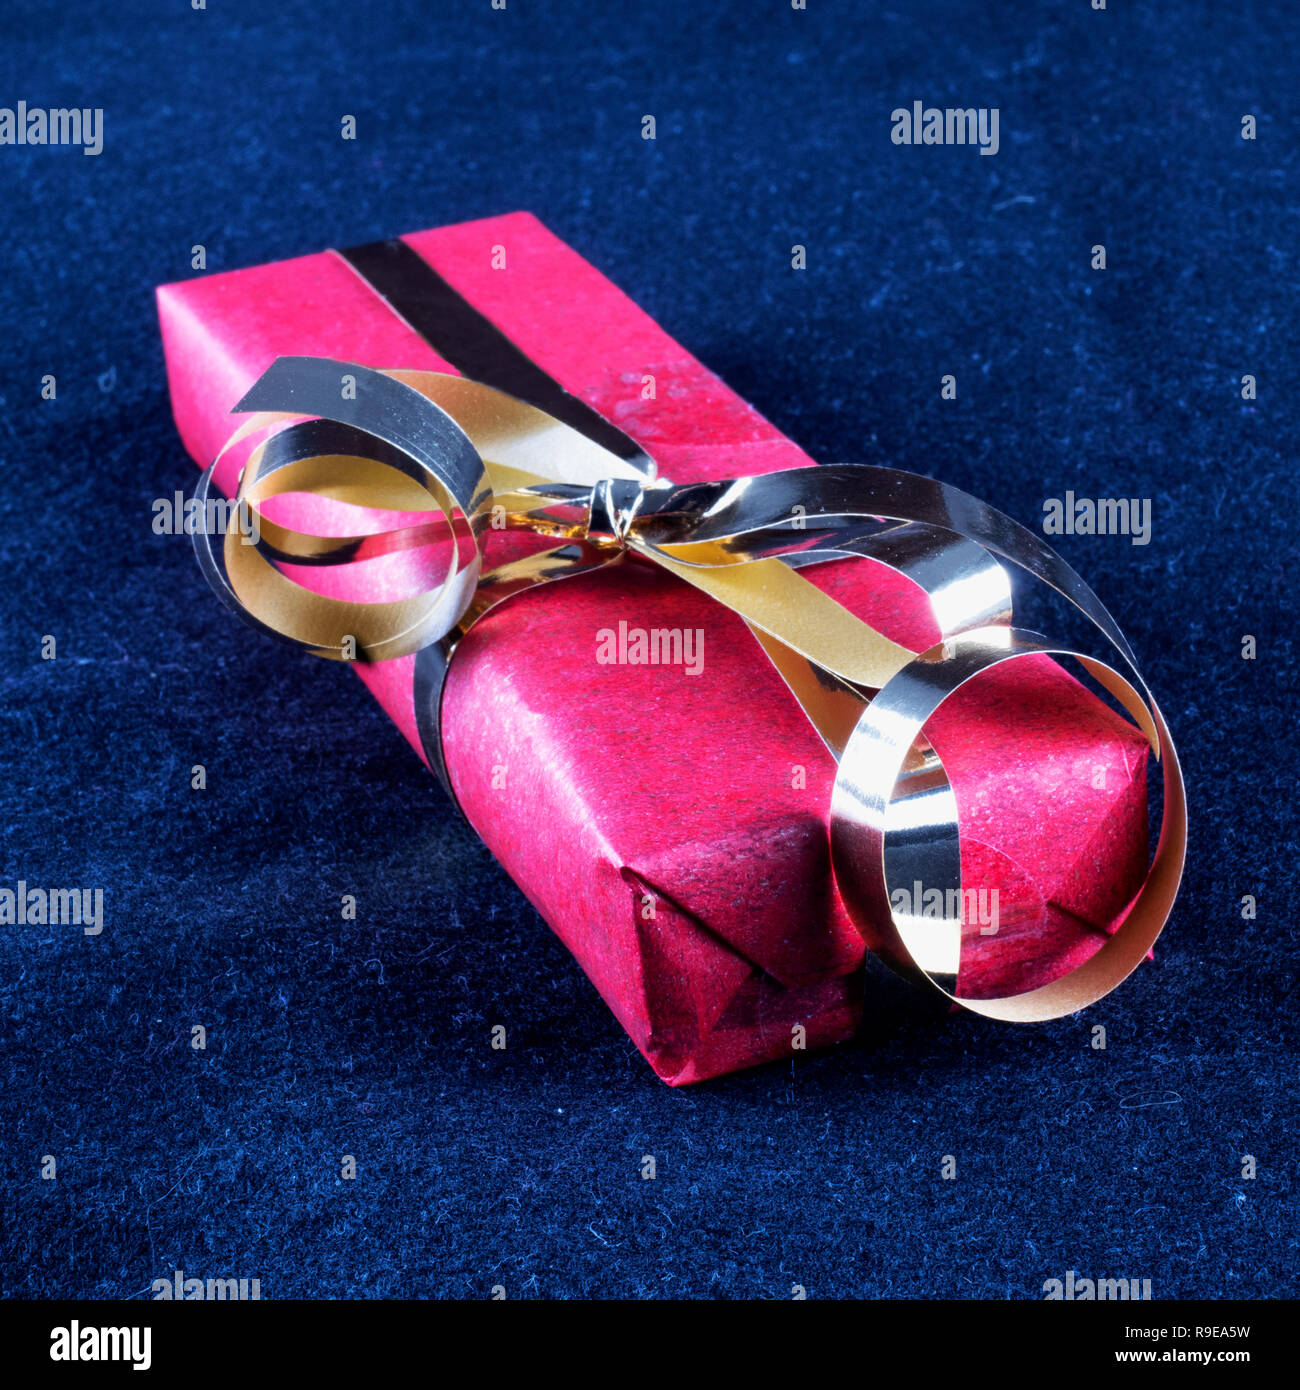 Gift box over black background, square image Stock Photo